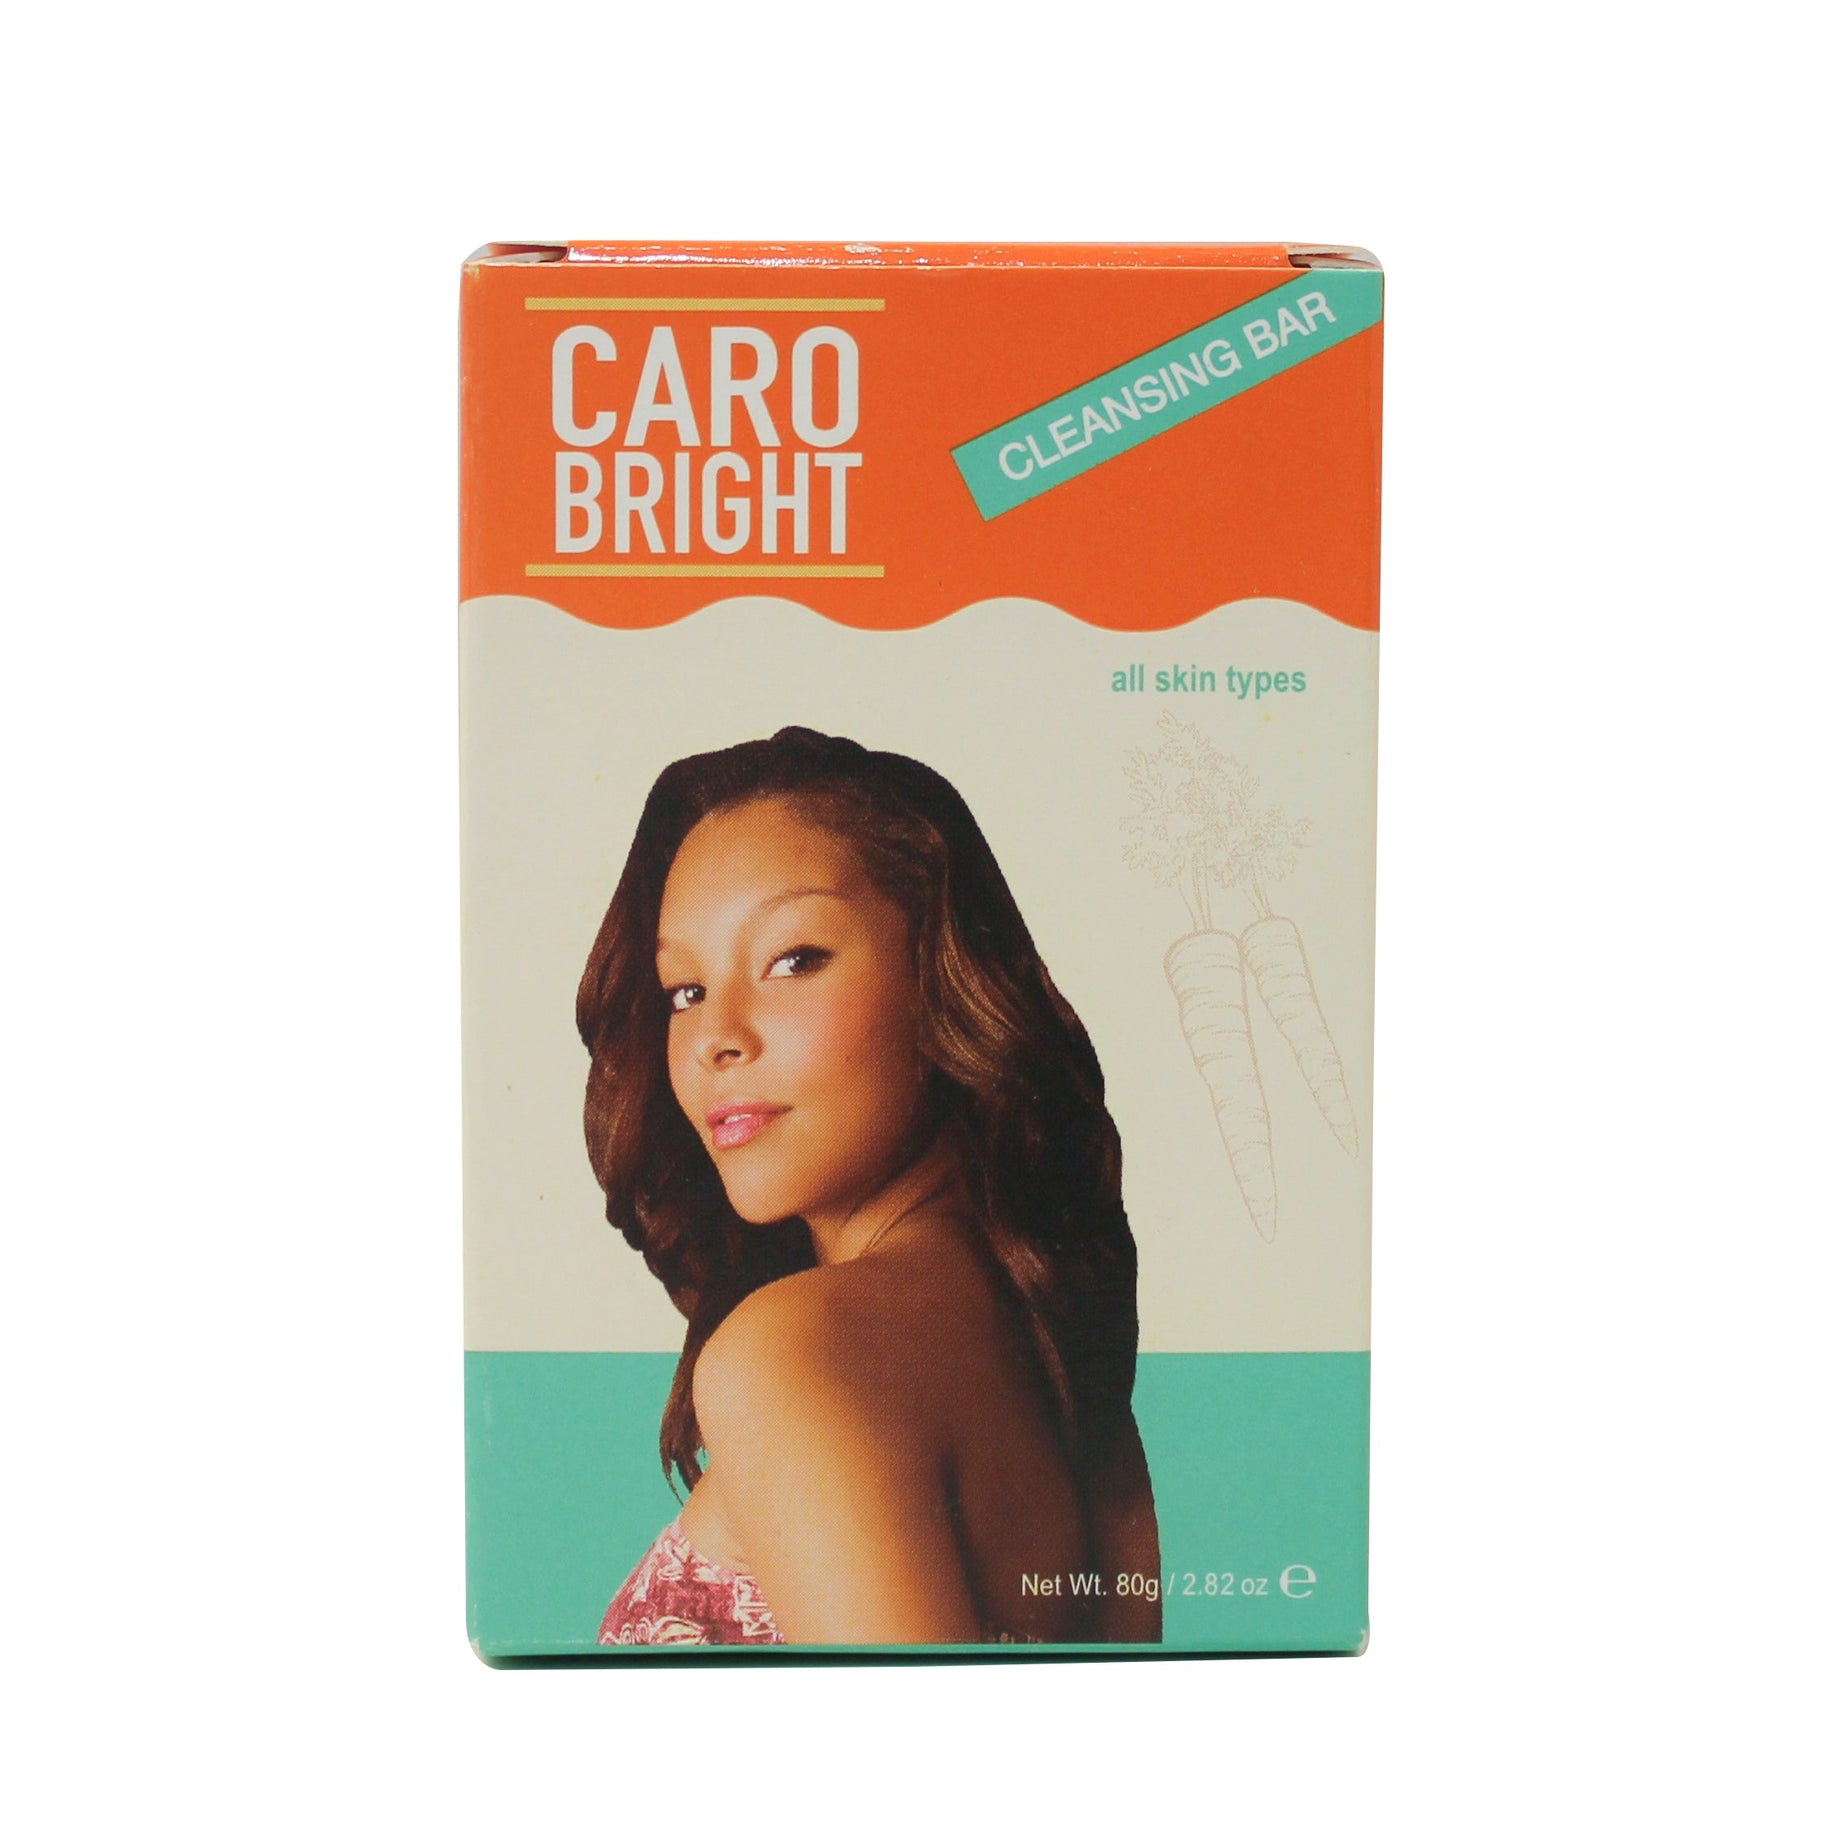 Caro Bright Cleansing Bar Soap 80 g/ 2.82 oz